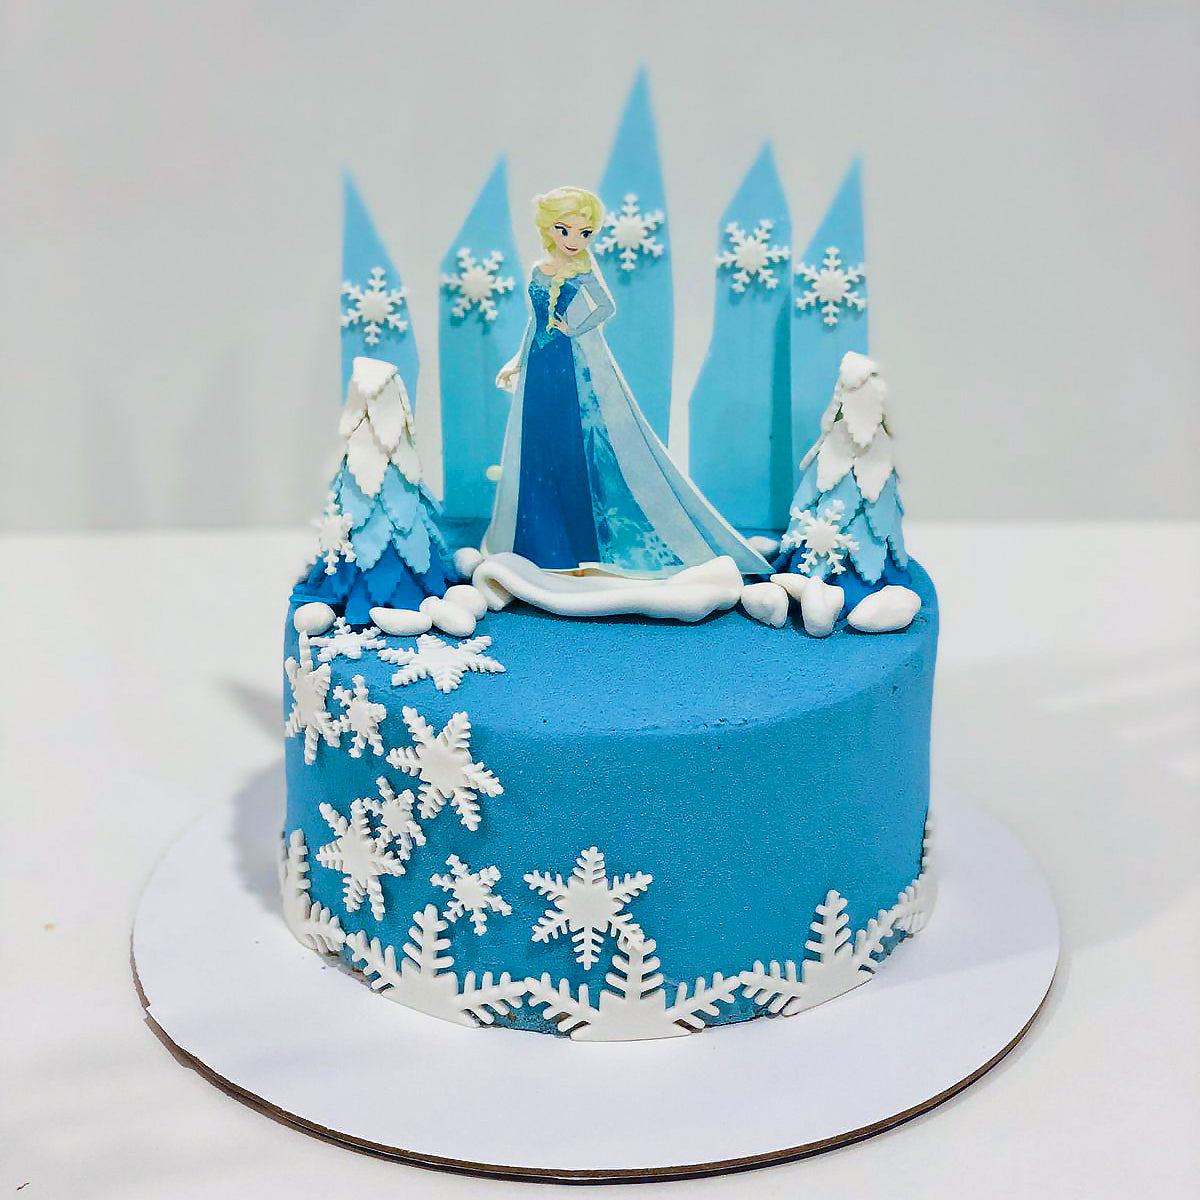 ARIEL LITTLE MERMAID Cake Pan Mold Disney Princess by Wilton 2105-4355  $18.00 - PicClick